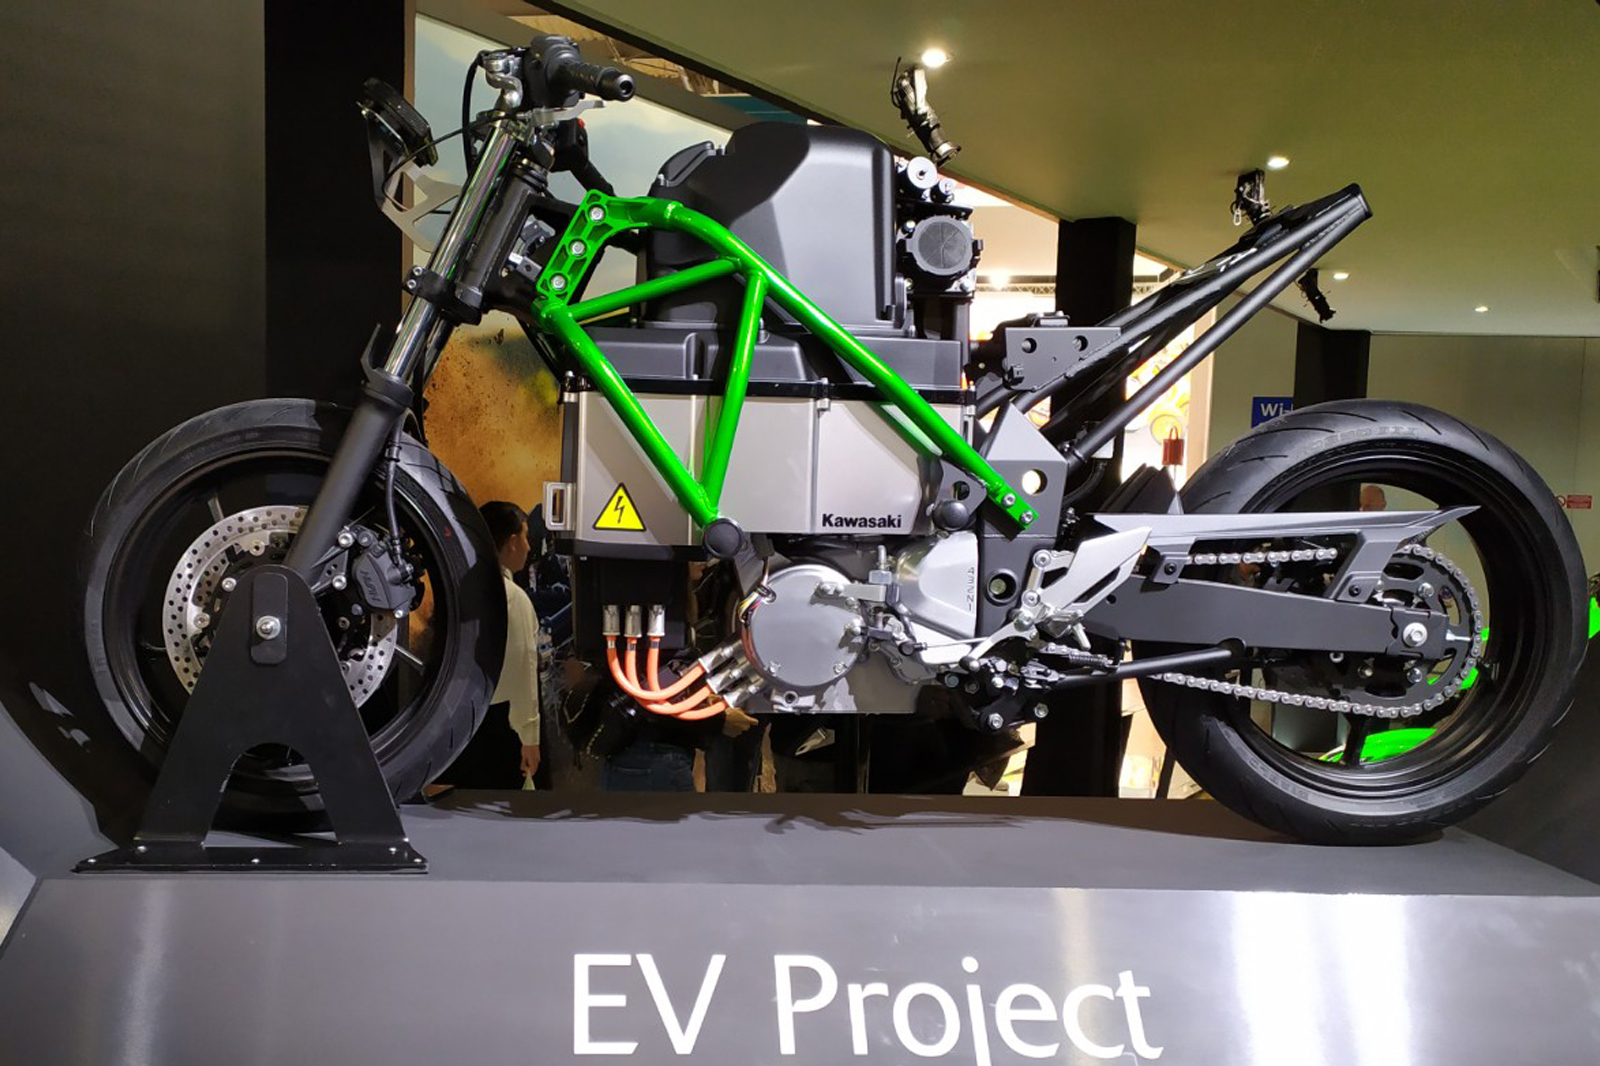 Kawasaki show geared Electric Concept